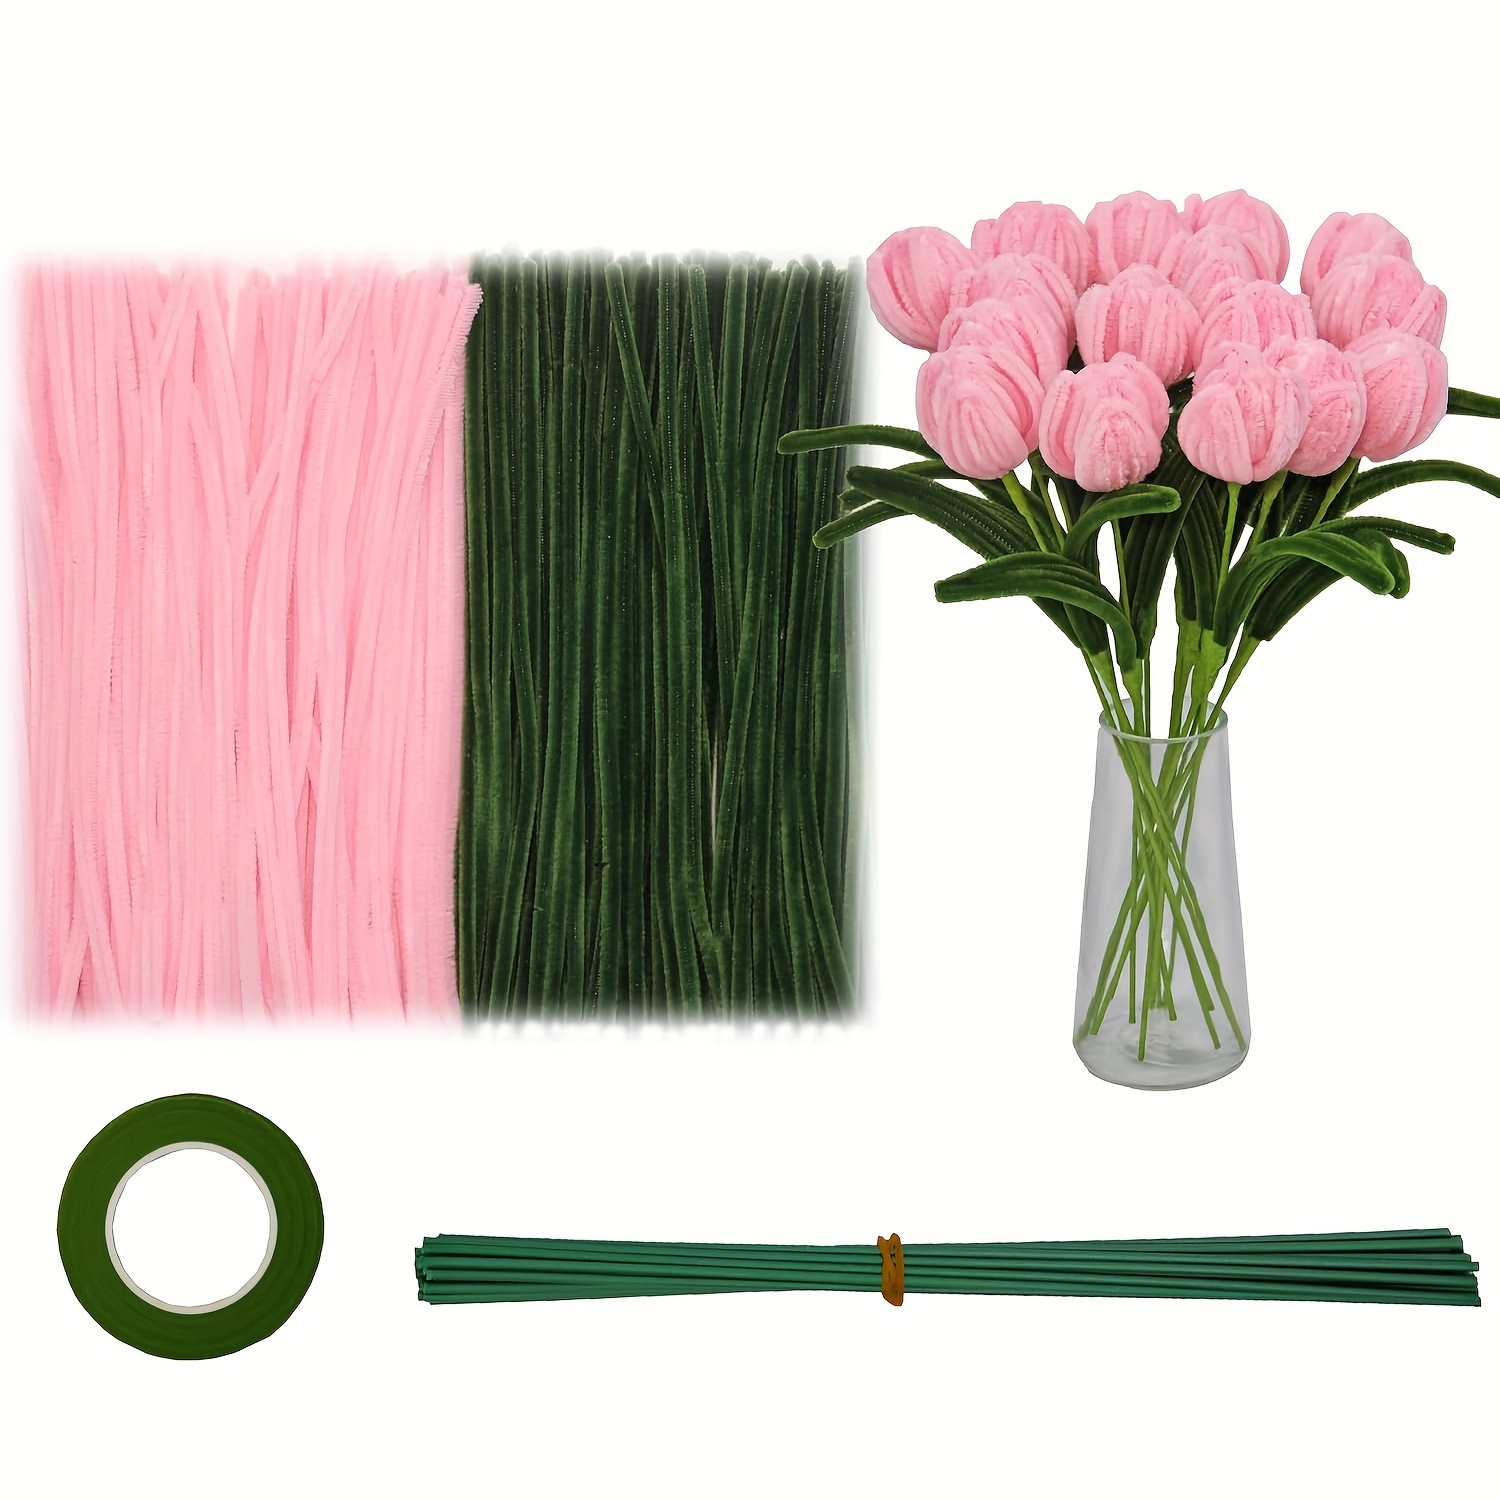 Limpiapipas Suministros para manualidades, kit de manualidades de flores,  kit de fabricación de ramo de tulipanes, palos peludos, materiales de